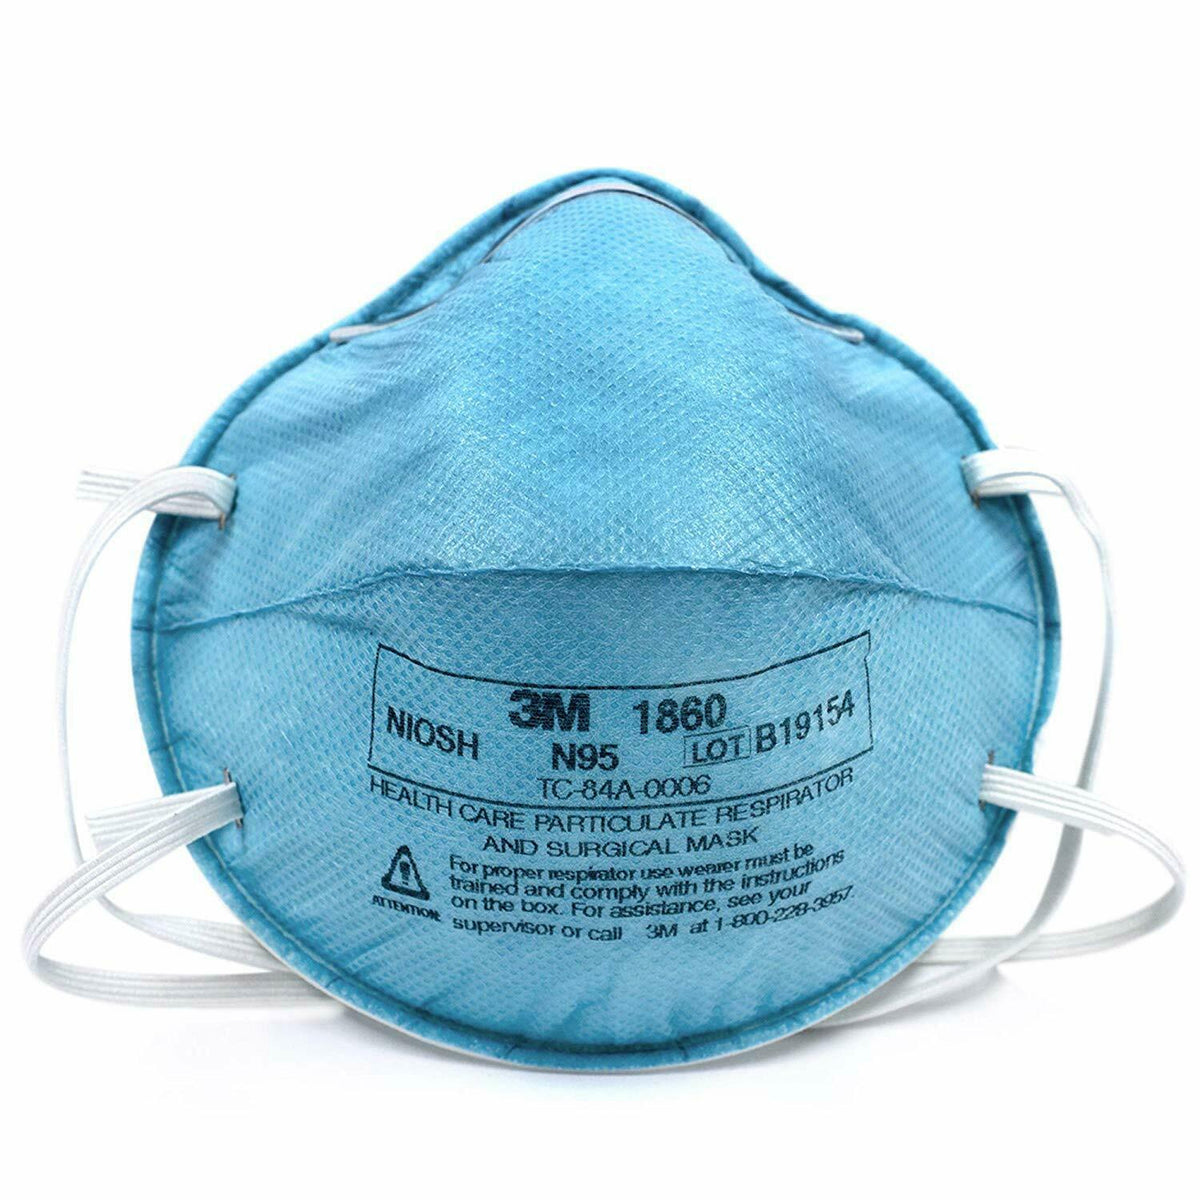 N95 1860 Respirator (20-pack) Masks In Stock